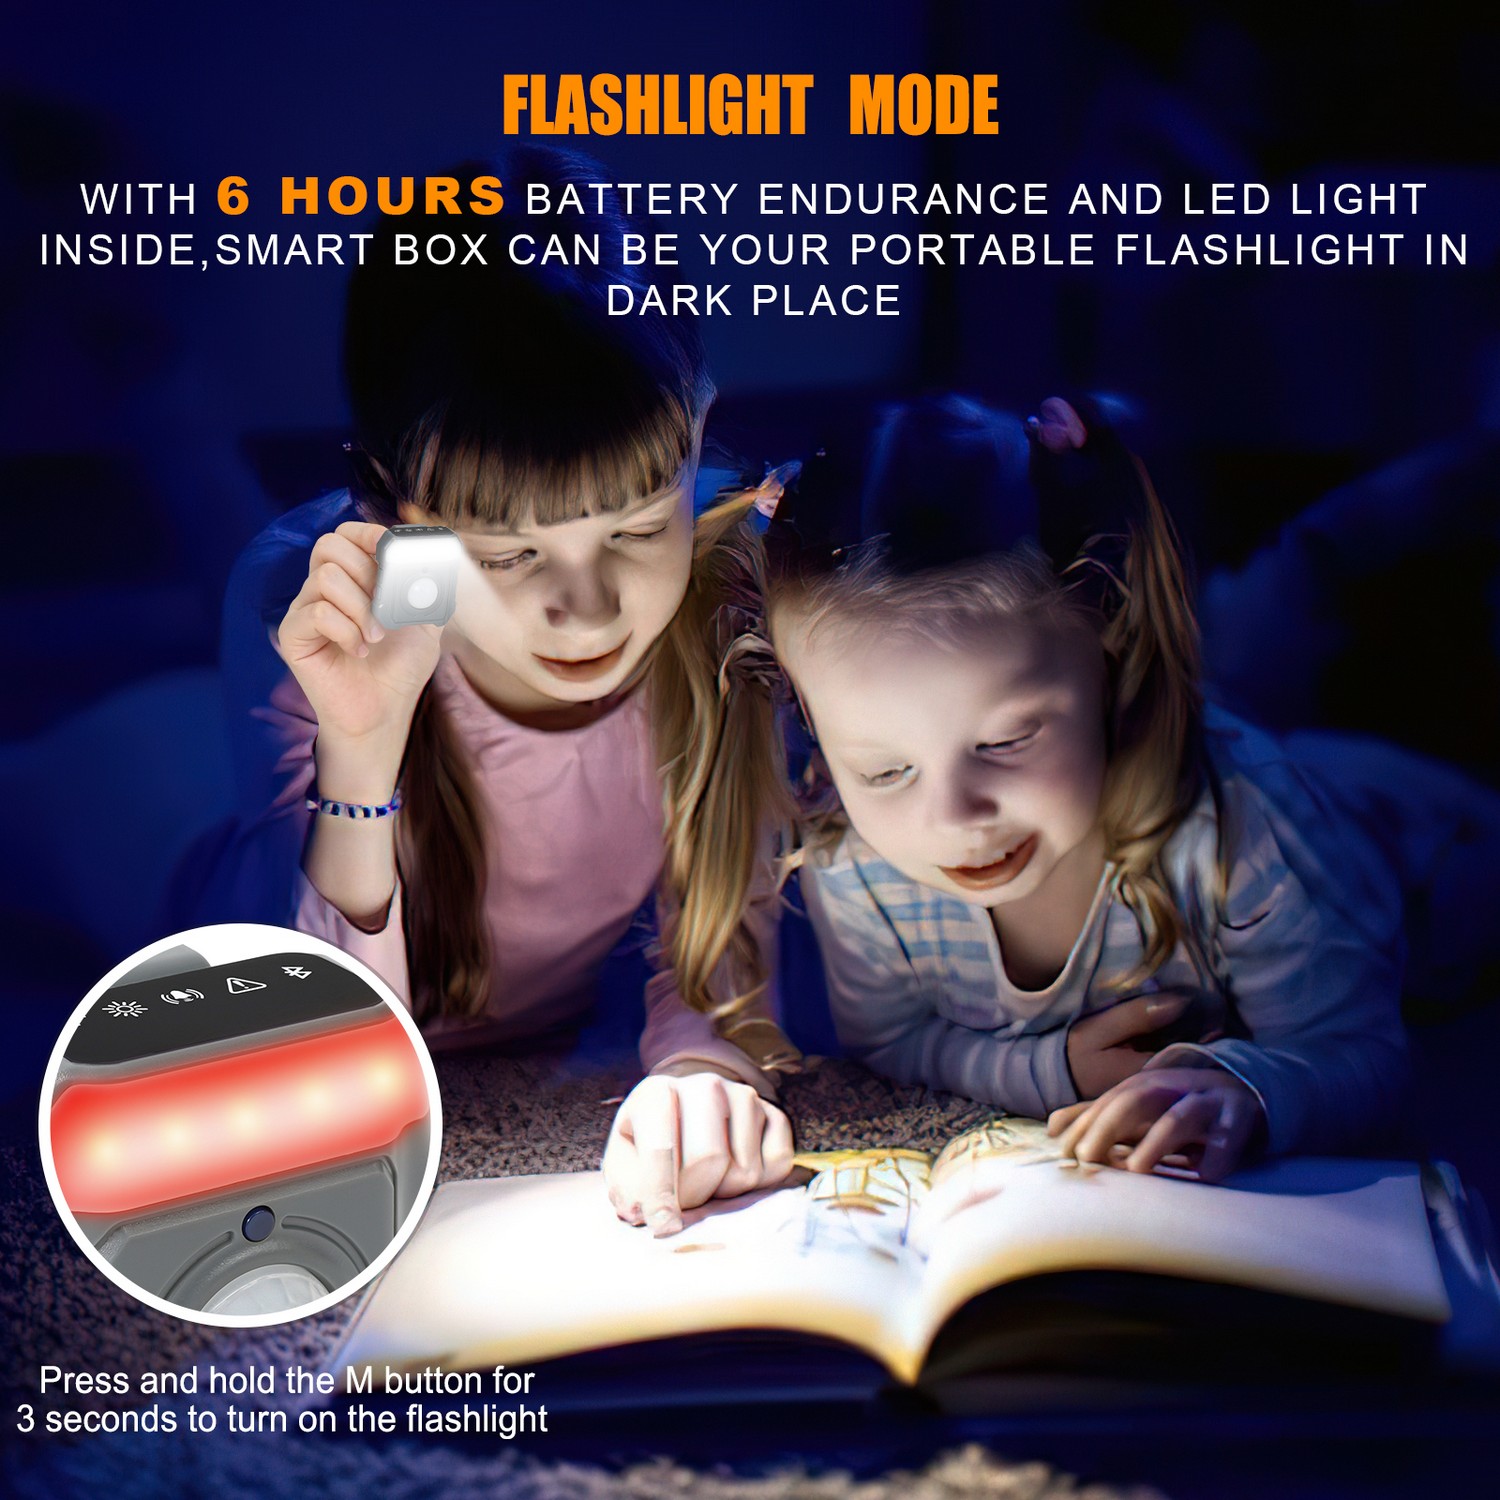 security smart alarm - flashlight mode - LED light